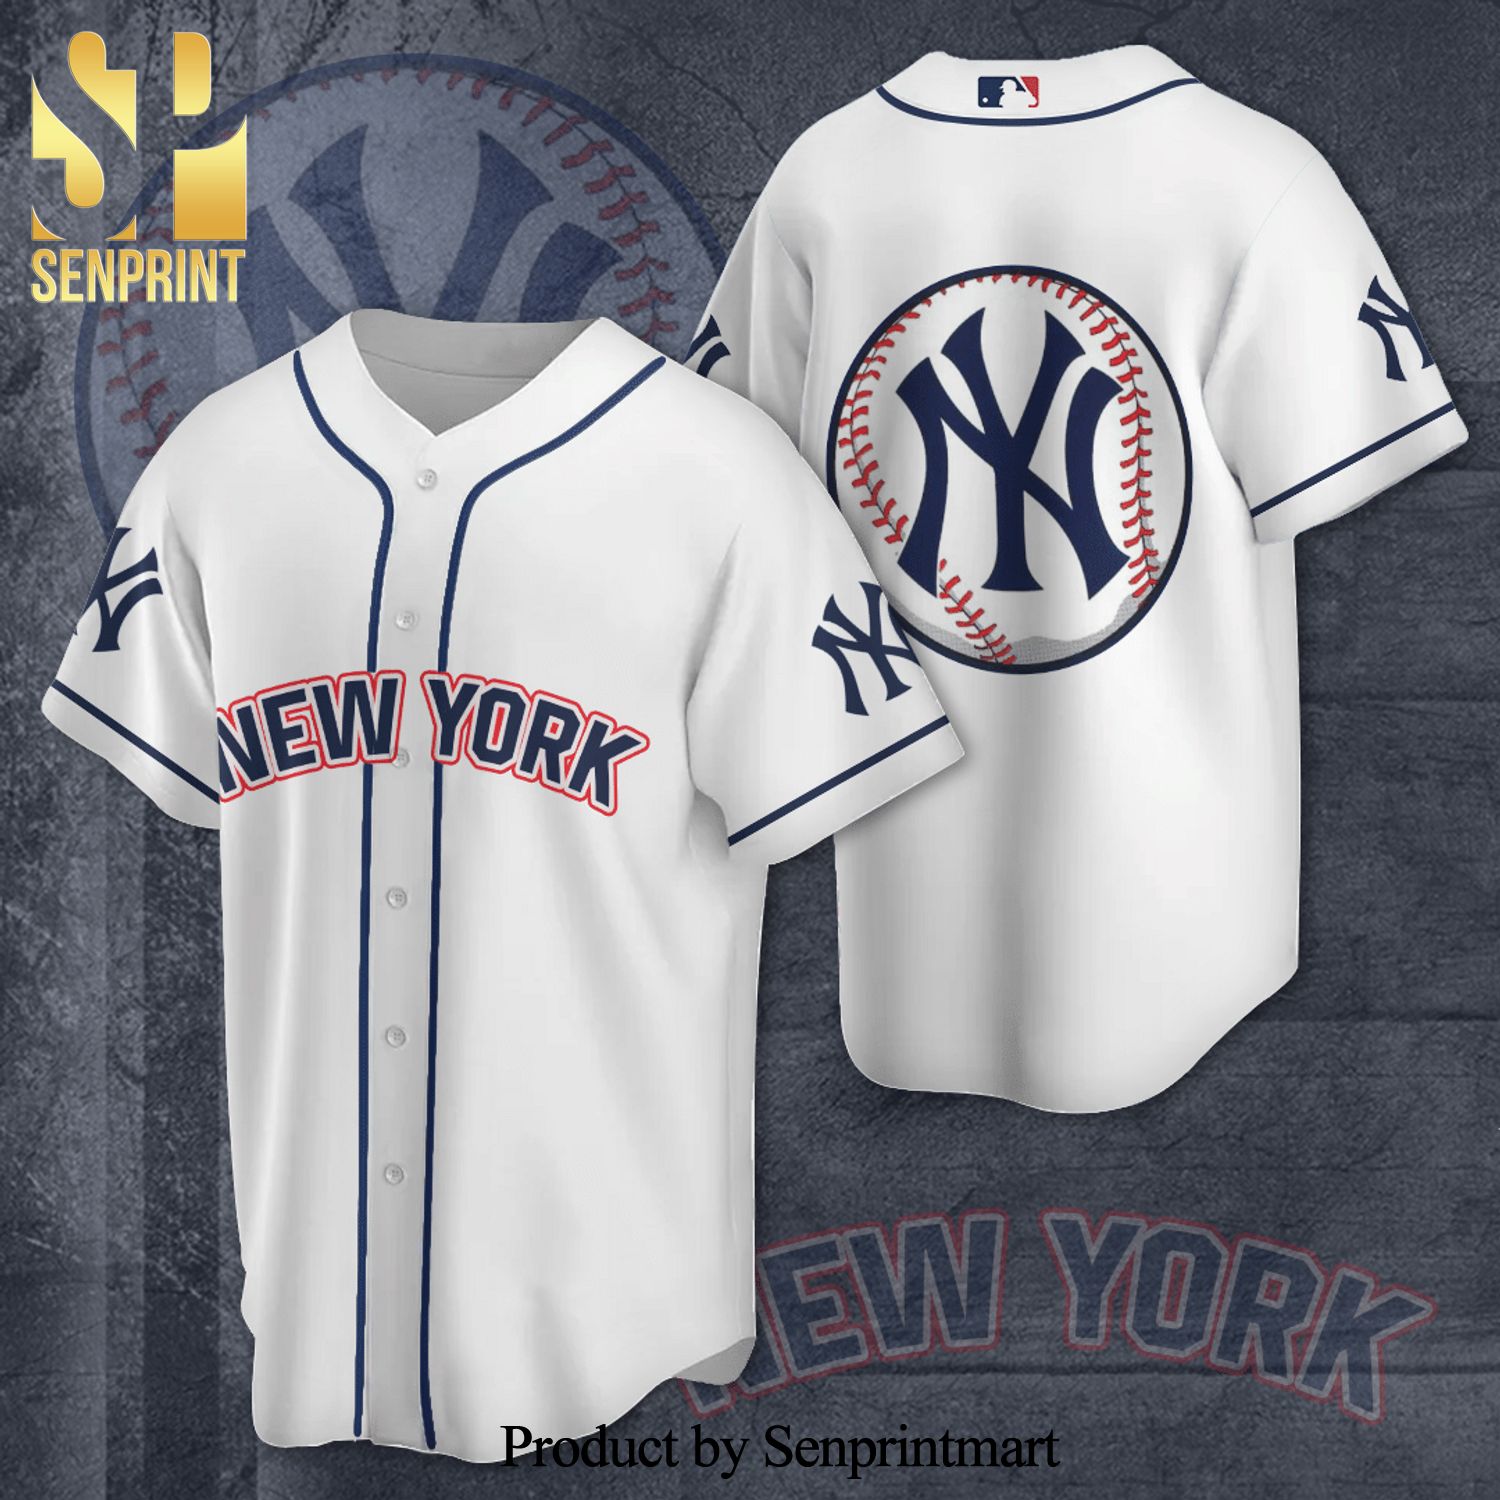 New York Yankees Baseball Team Full Printing Jersey Shirt-White